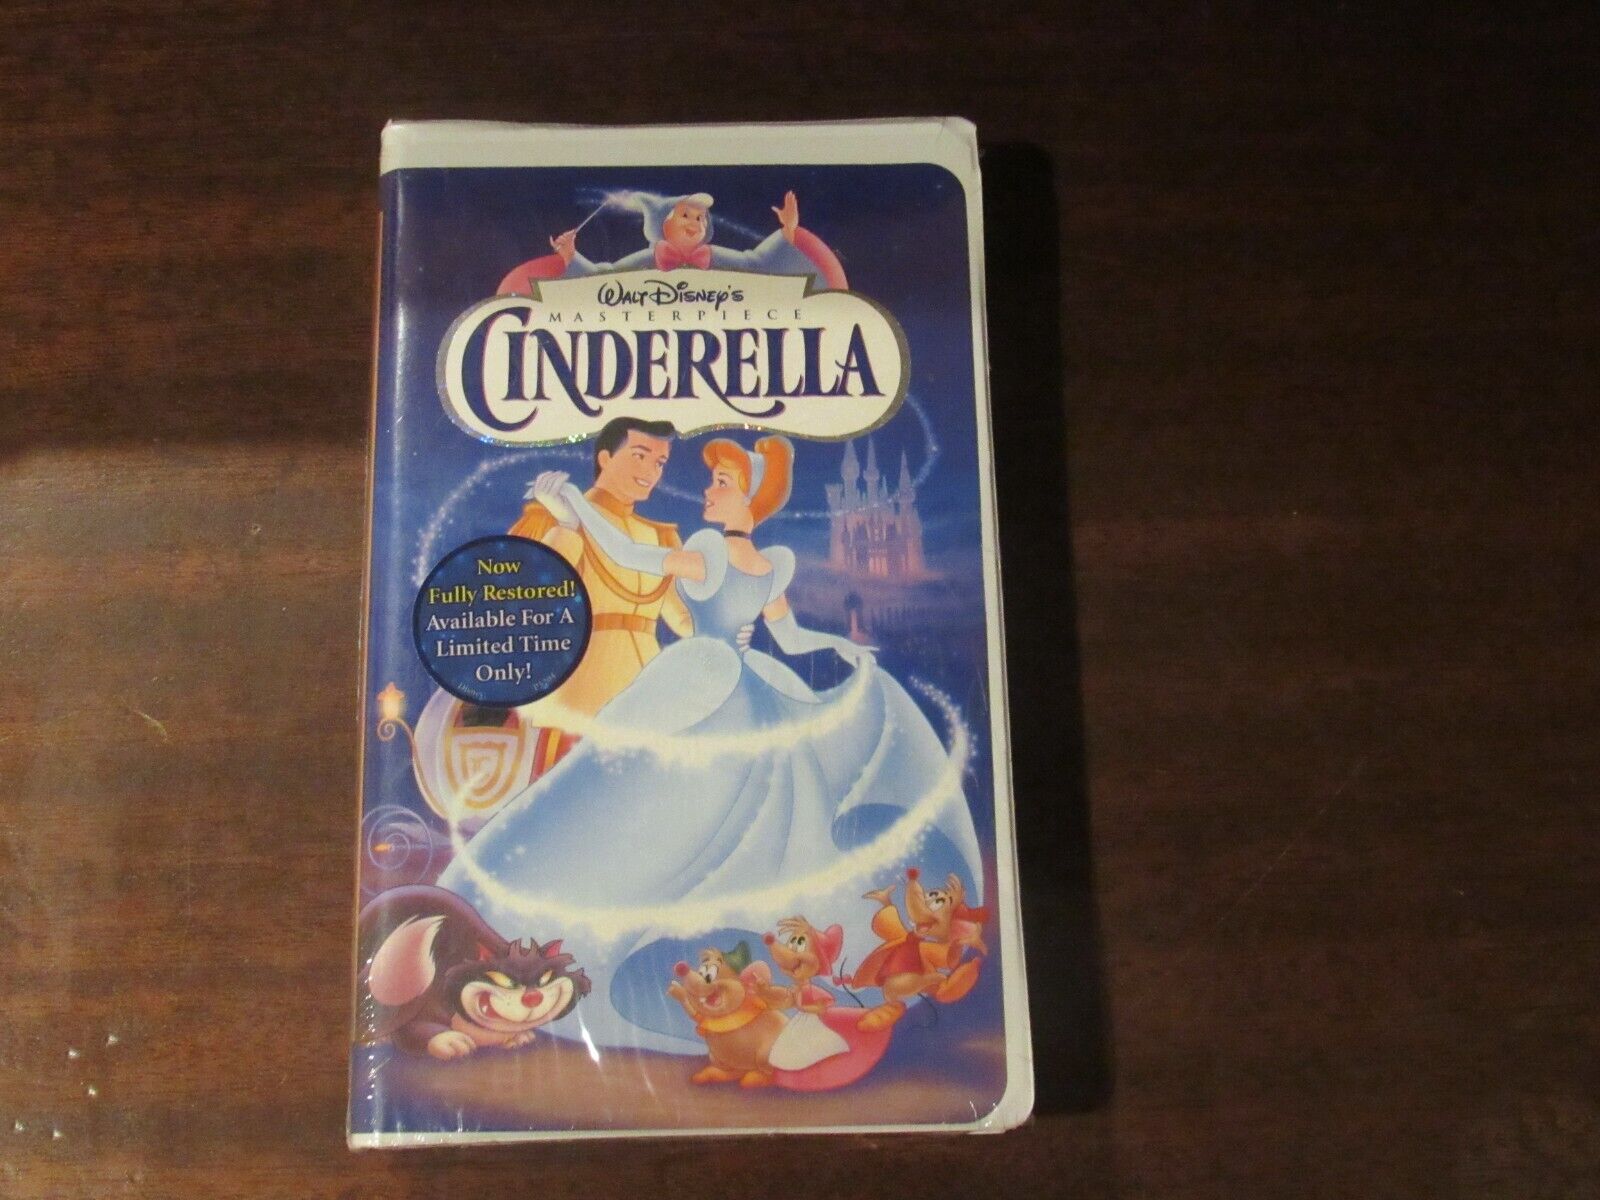 RARE Cinderella SEALED VHS Walt Disney Masterpiece 1995 Brand New NL7